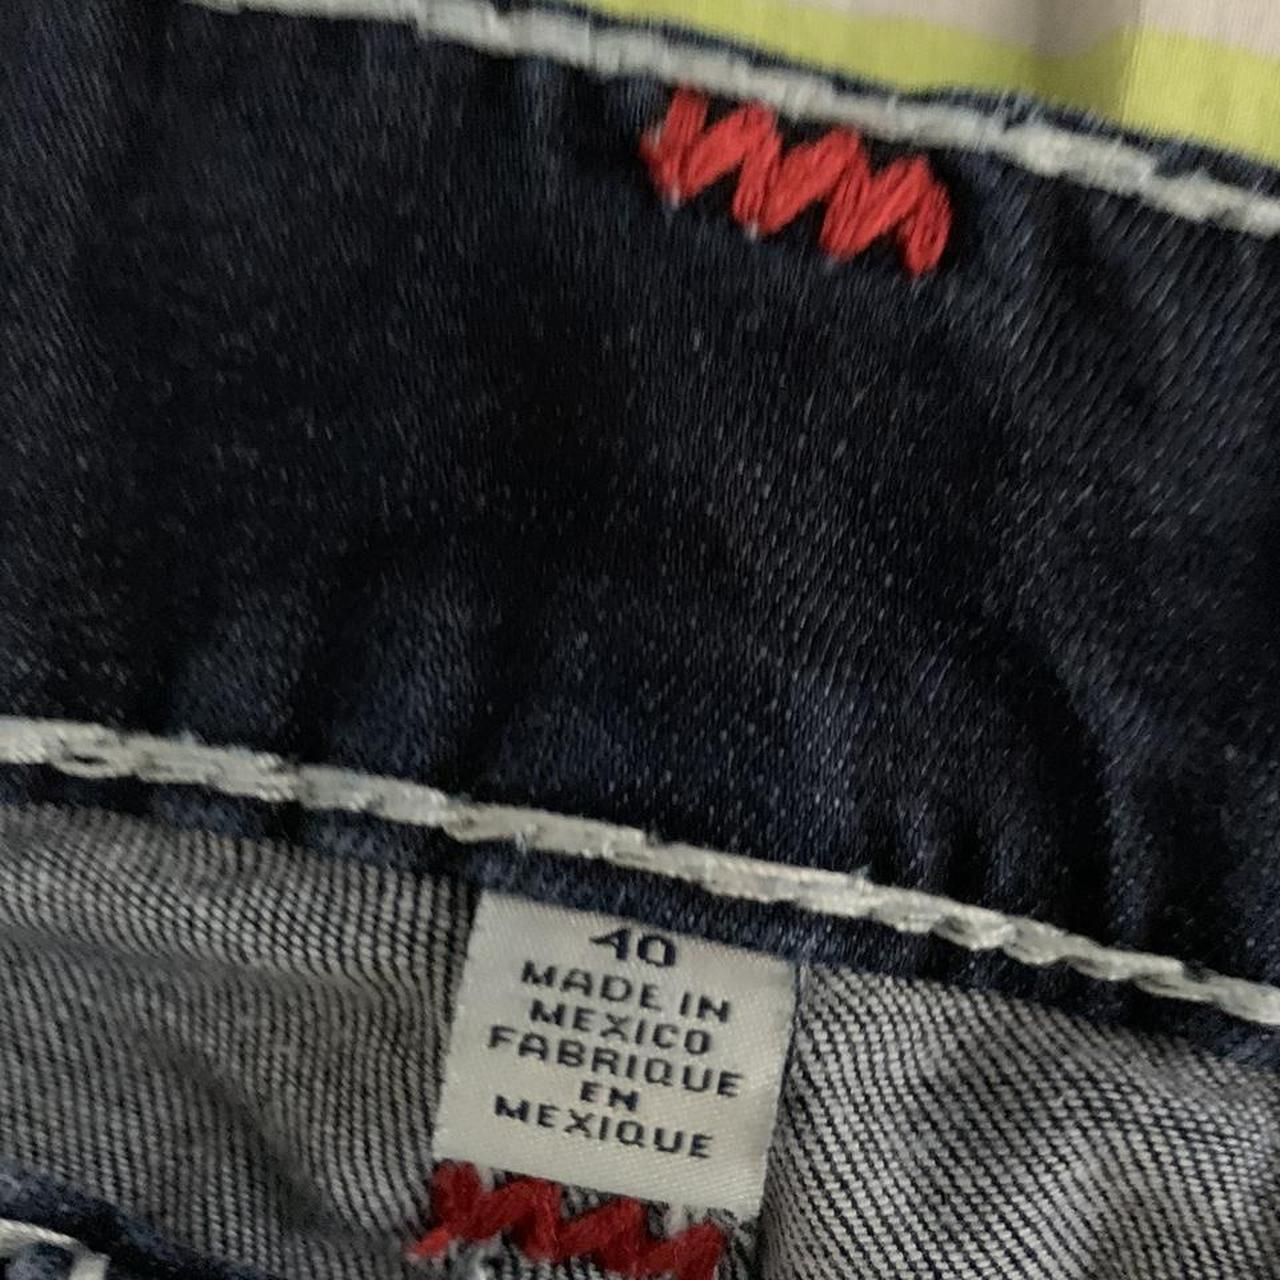 Used true religion jeans - Depop